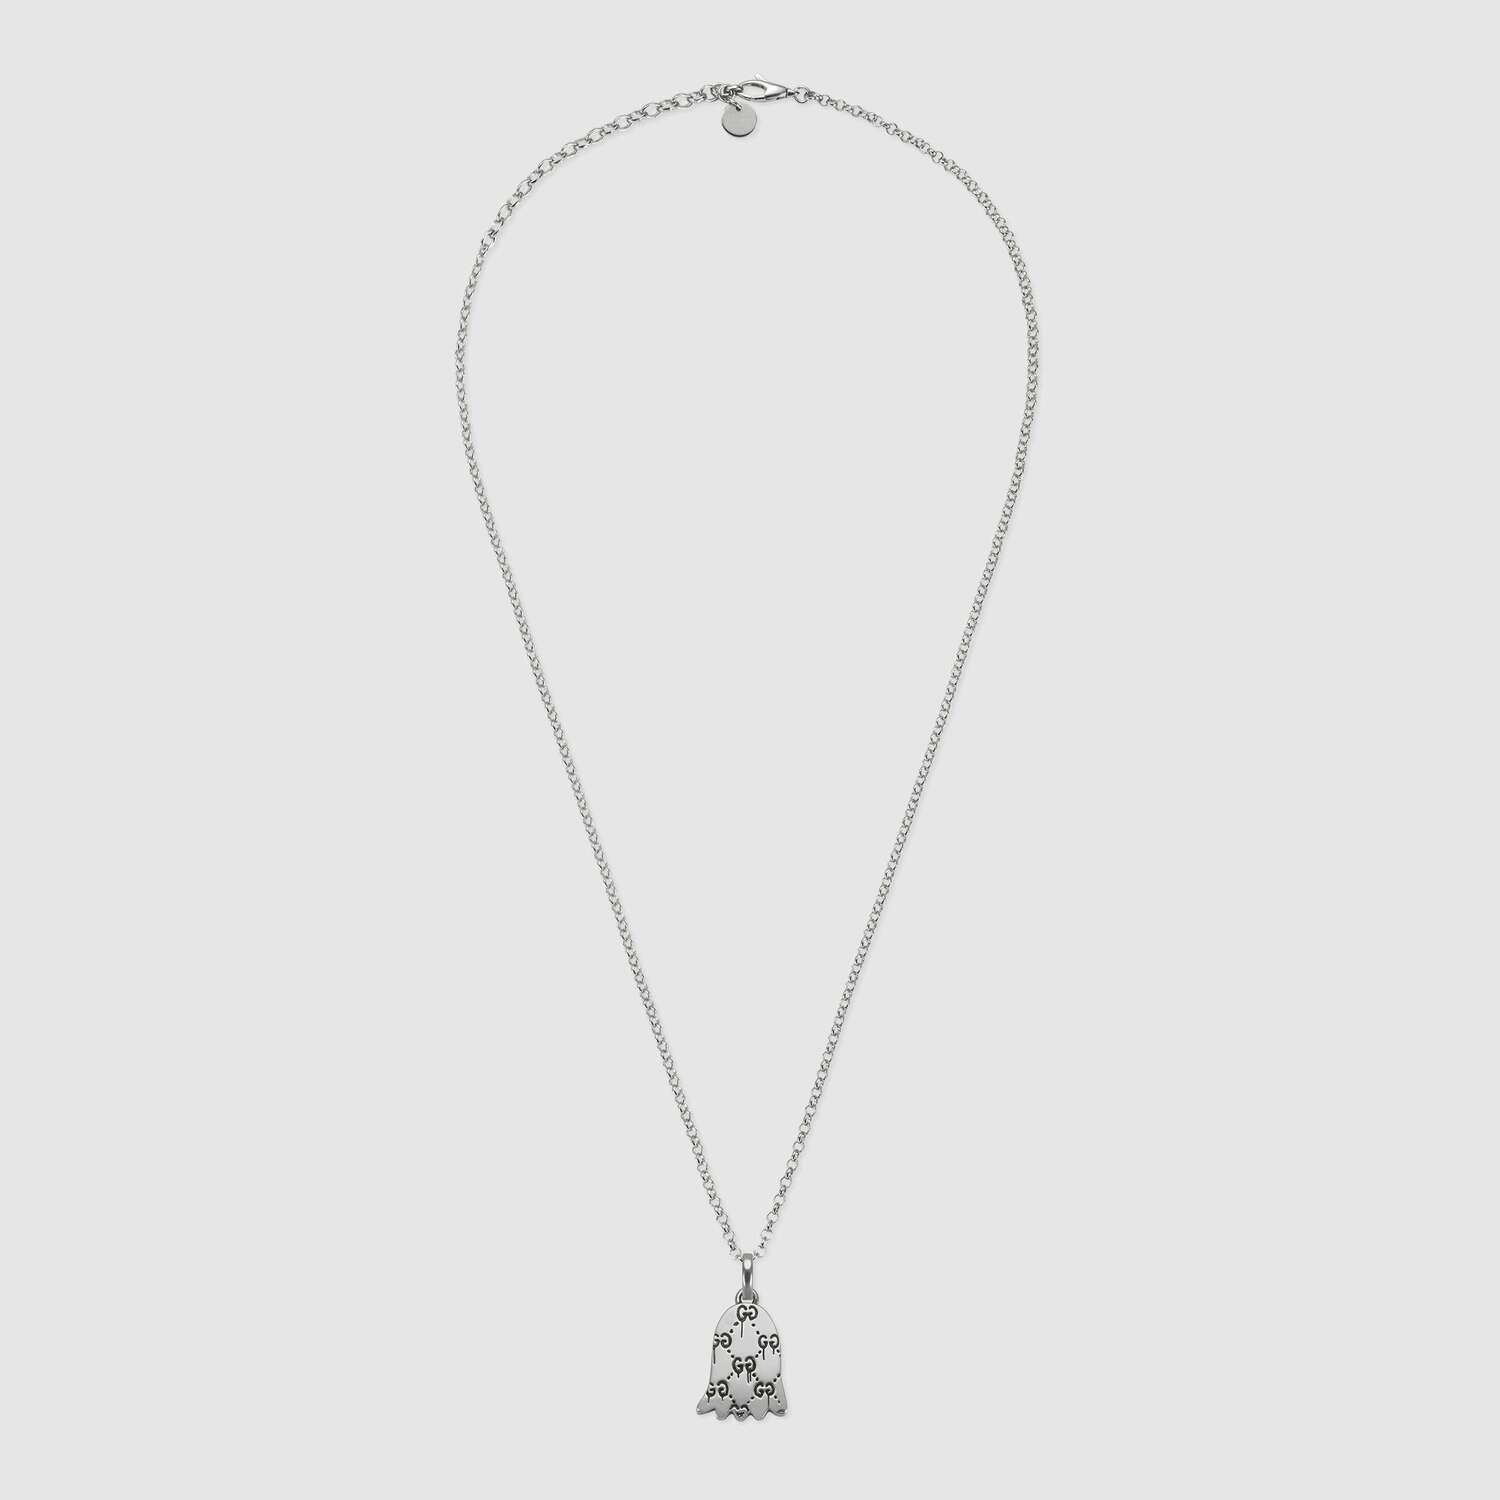 Gucci - Trademark - Silver Necklace, YBB356223001